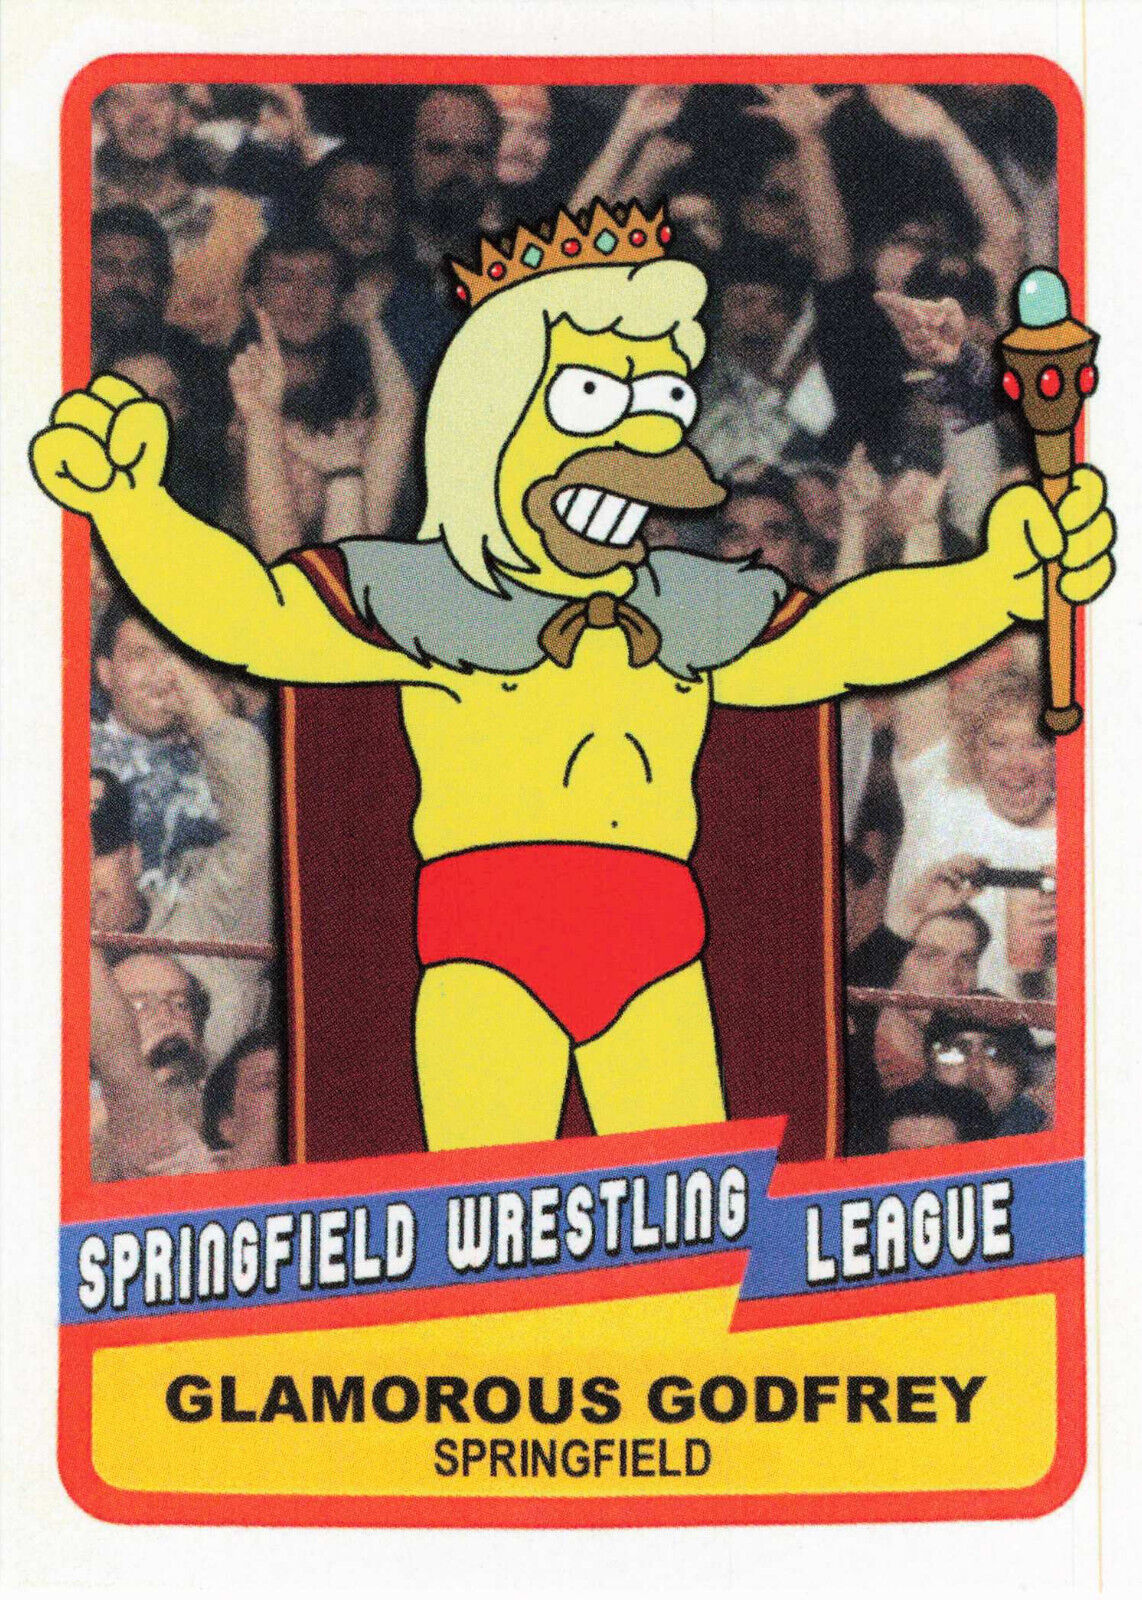 Glamorous Godfrey Chris51 Parody Card Simpsons Springfield Pro Wrestling